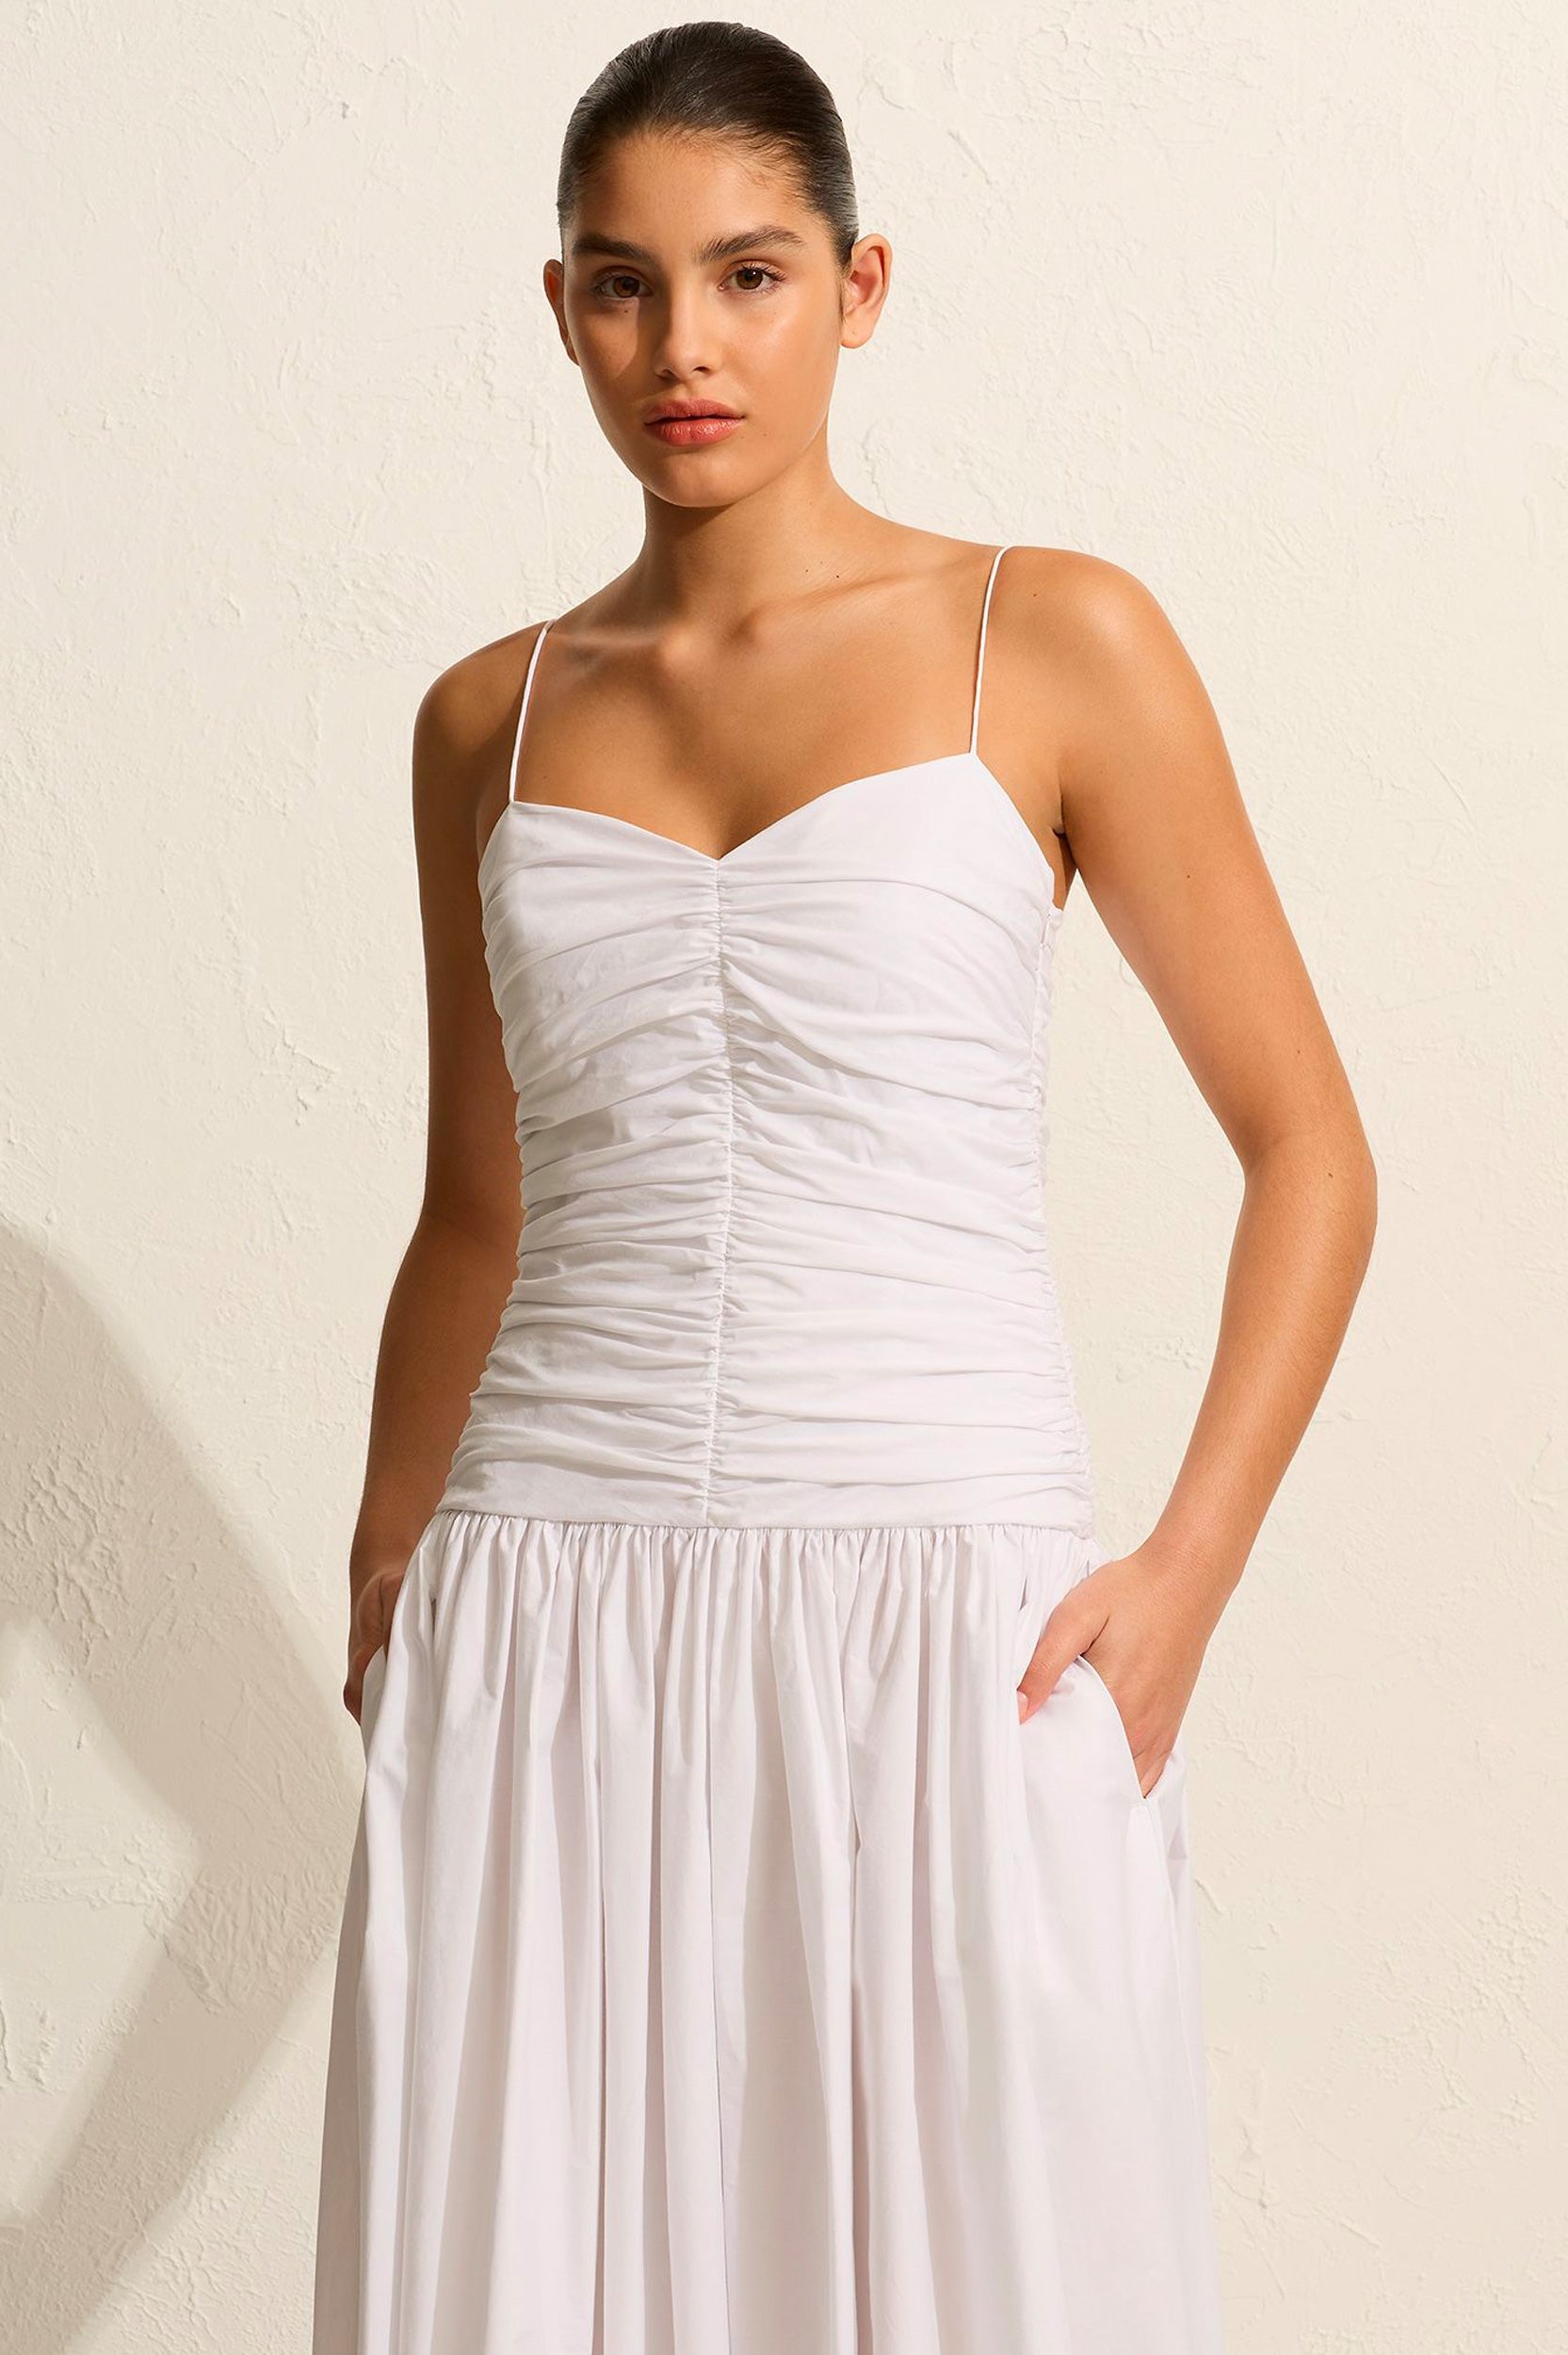 Gathered Drop Waist Dress in White